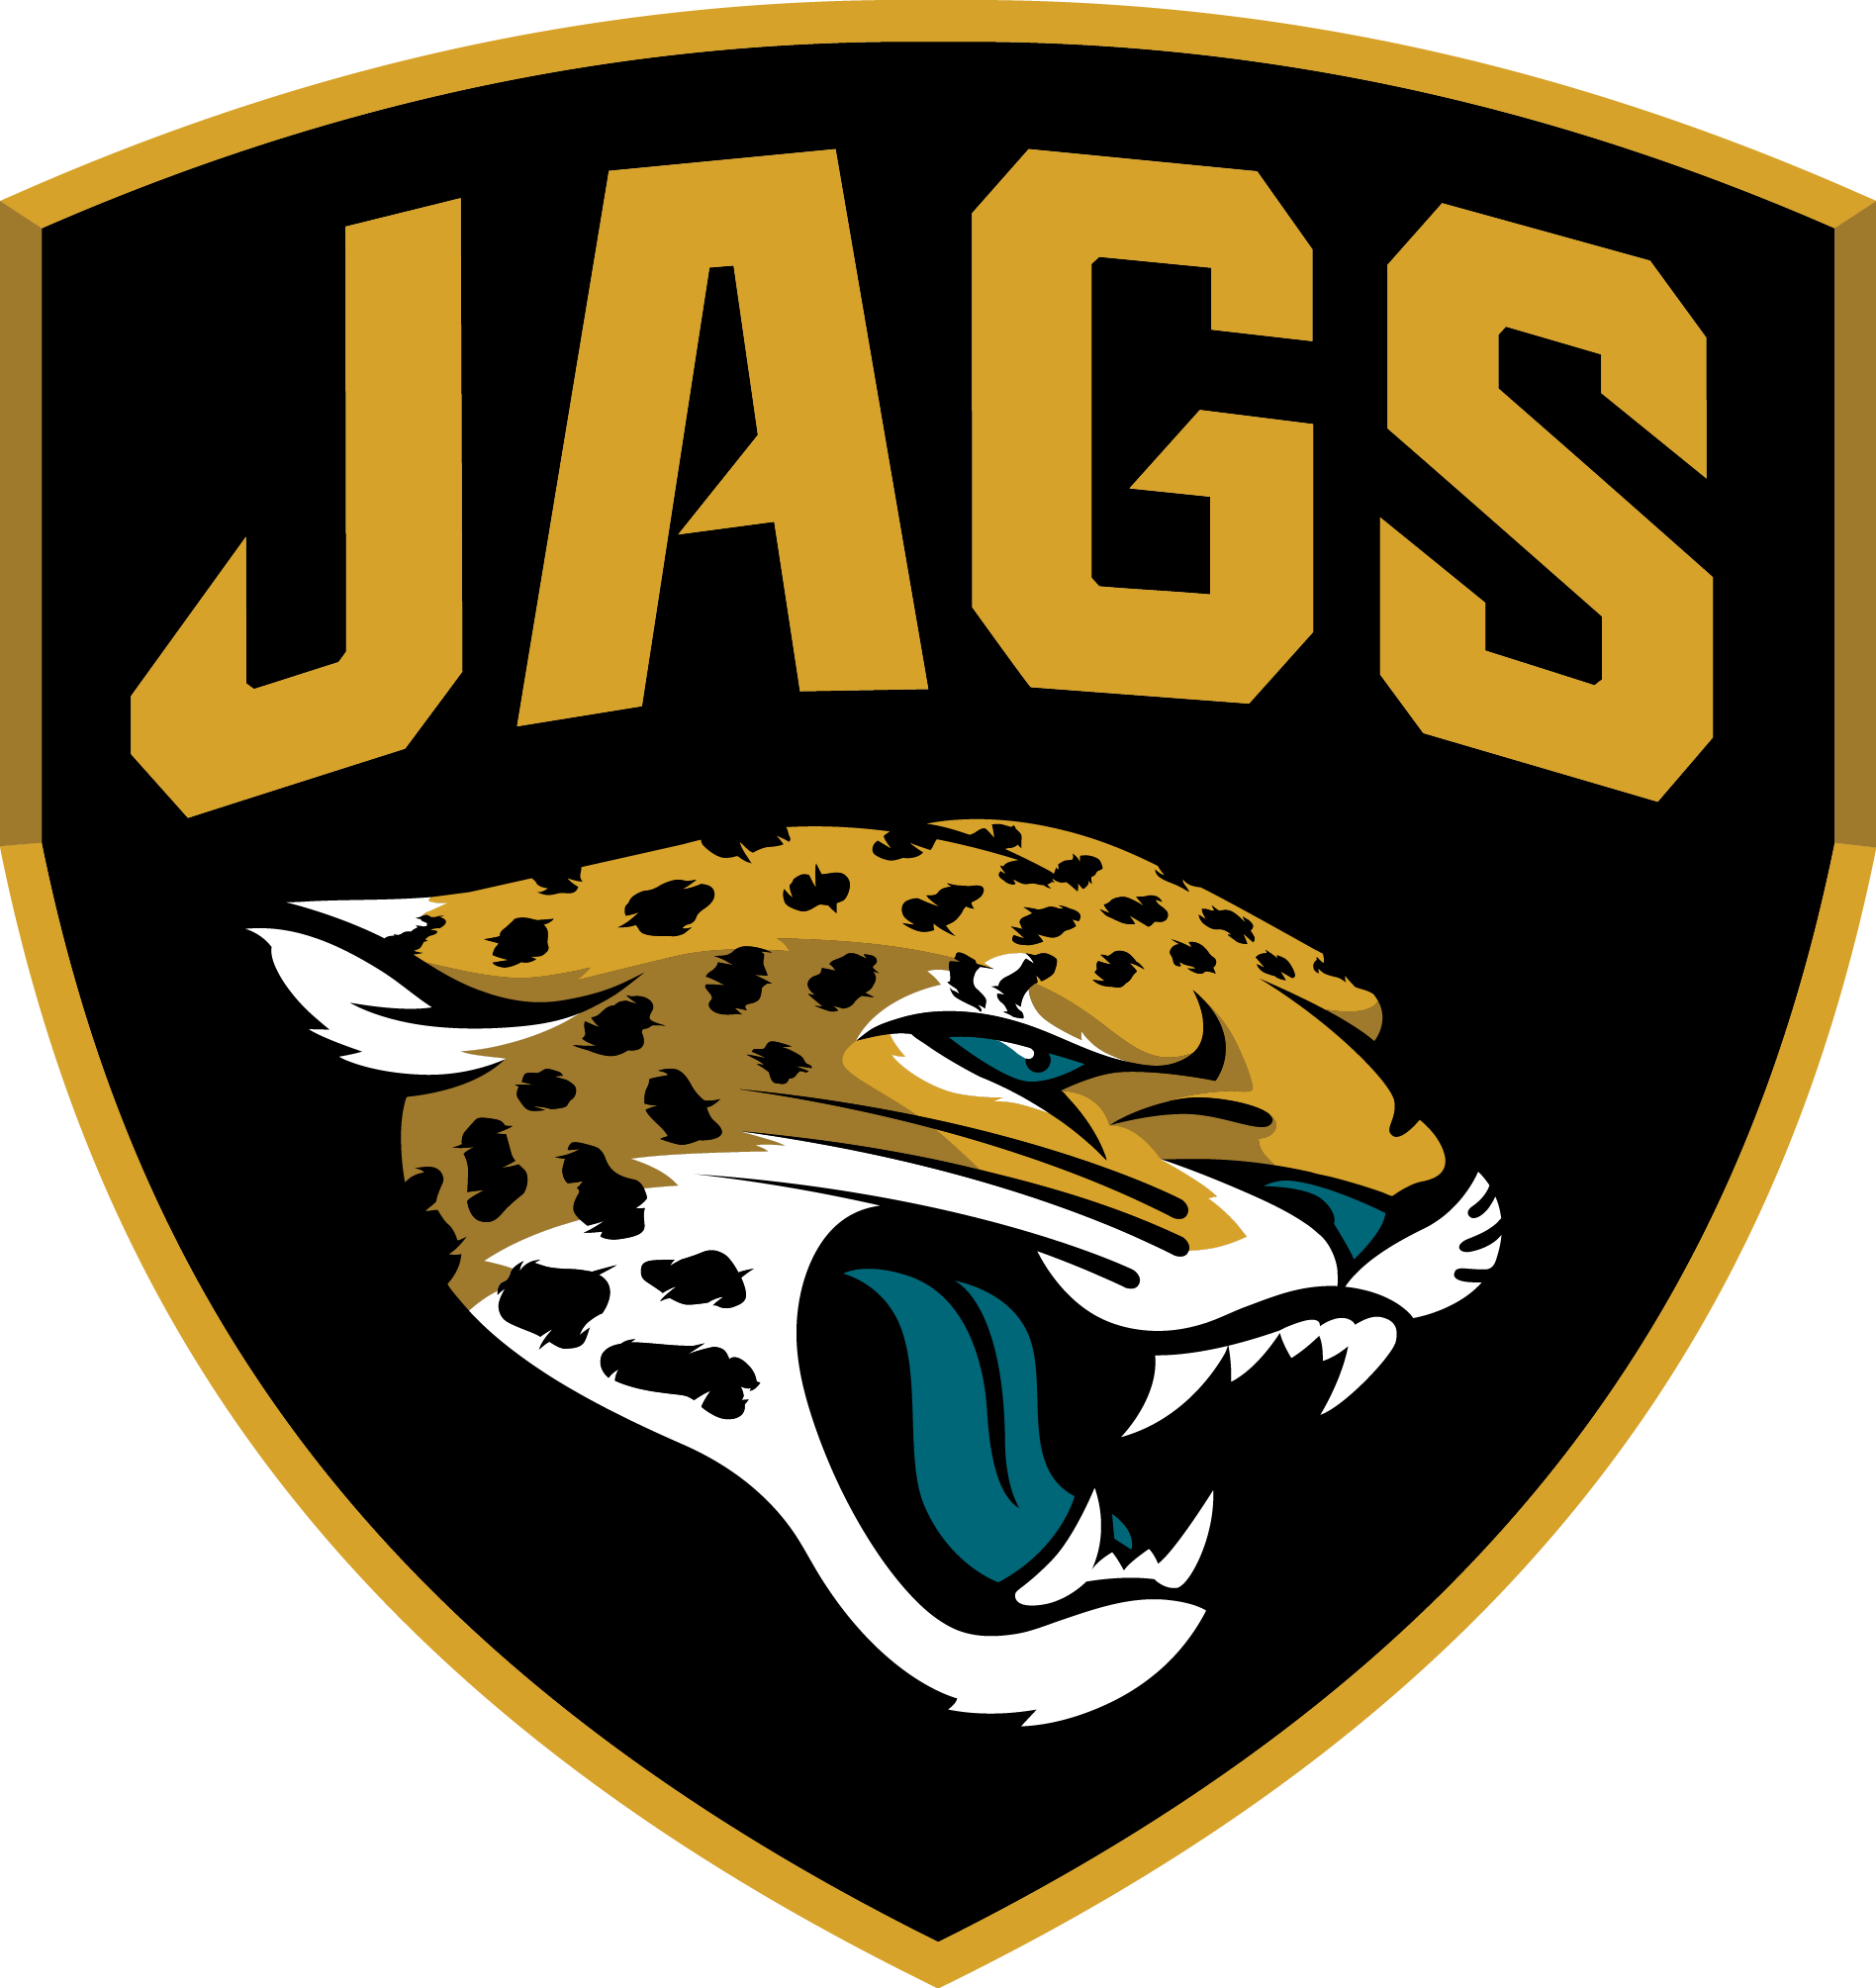 Jaguars Football Team Logo - Jacksonville Jaguars Alternate Logo (2013) - Golden jaguar head with ...